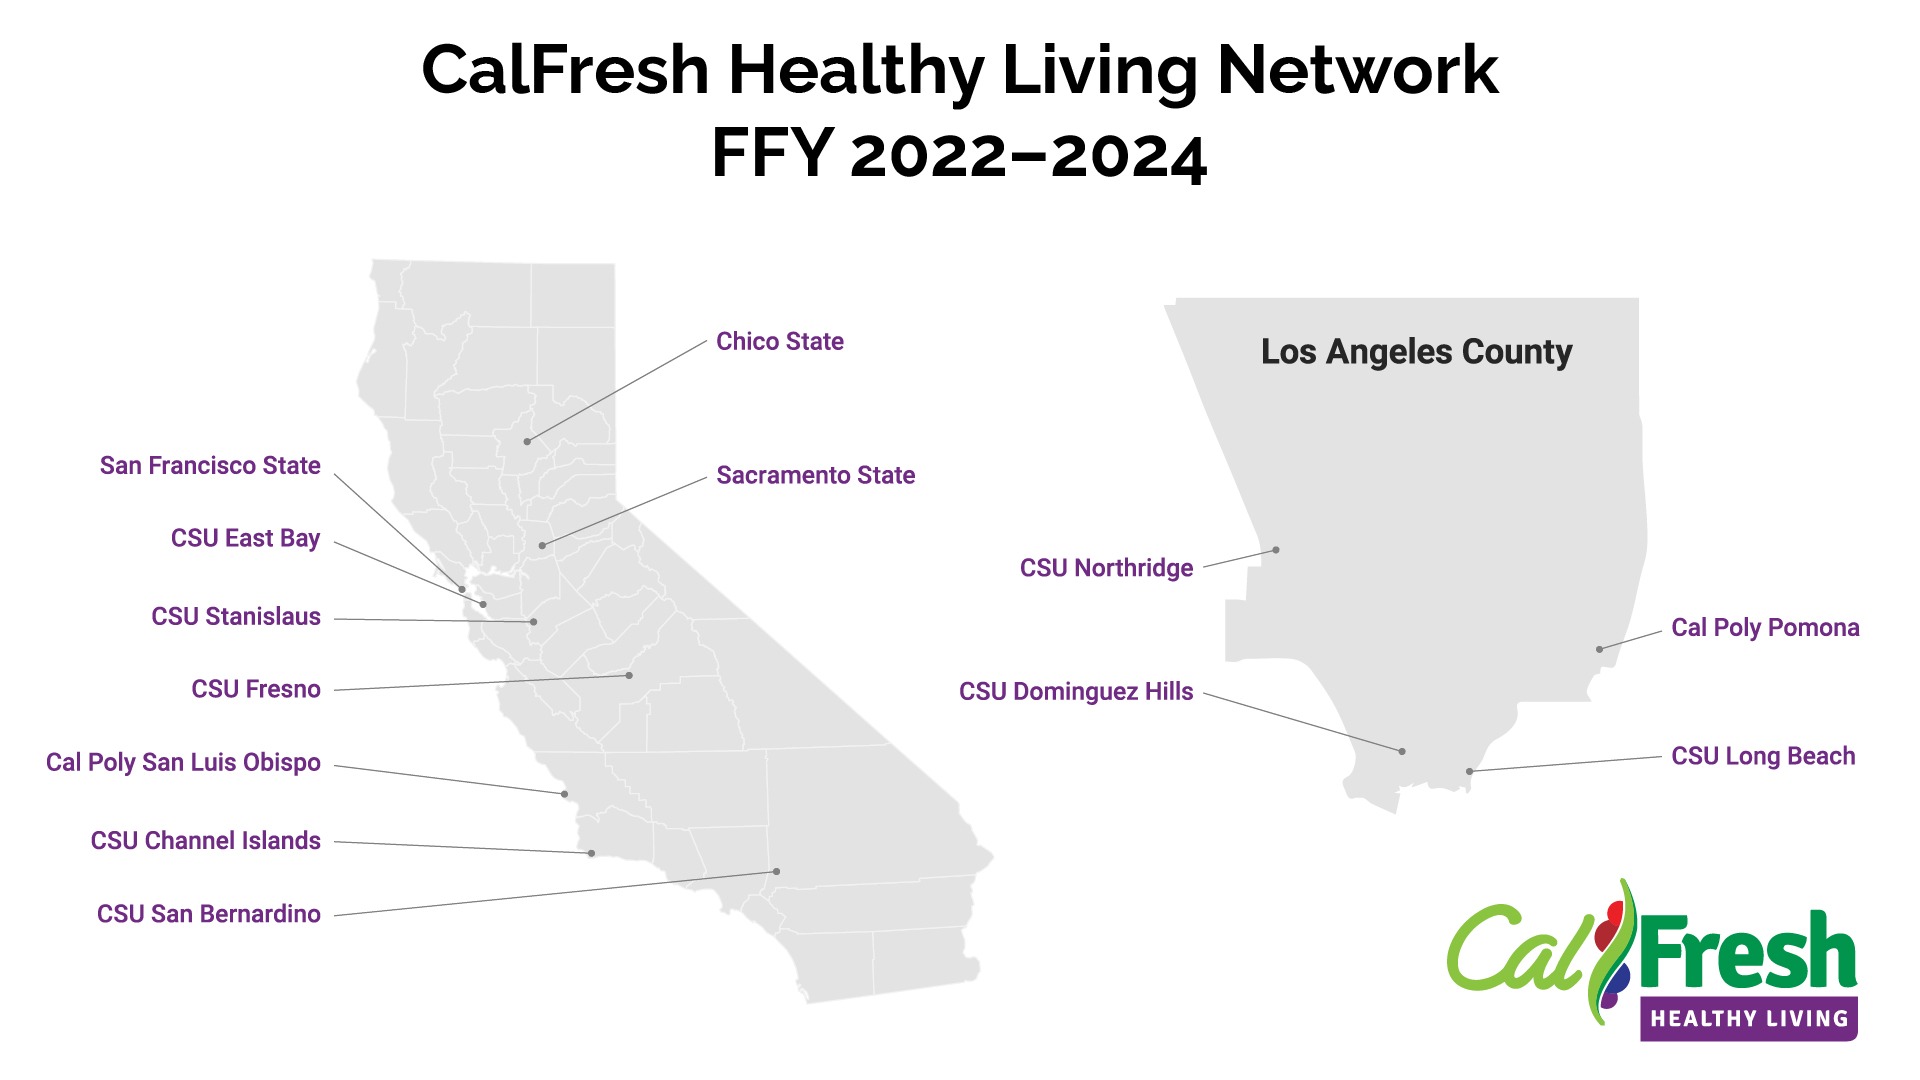 CalFresh Healthy Living Network FFY 2022-2024